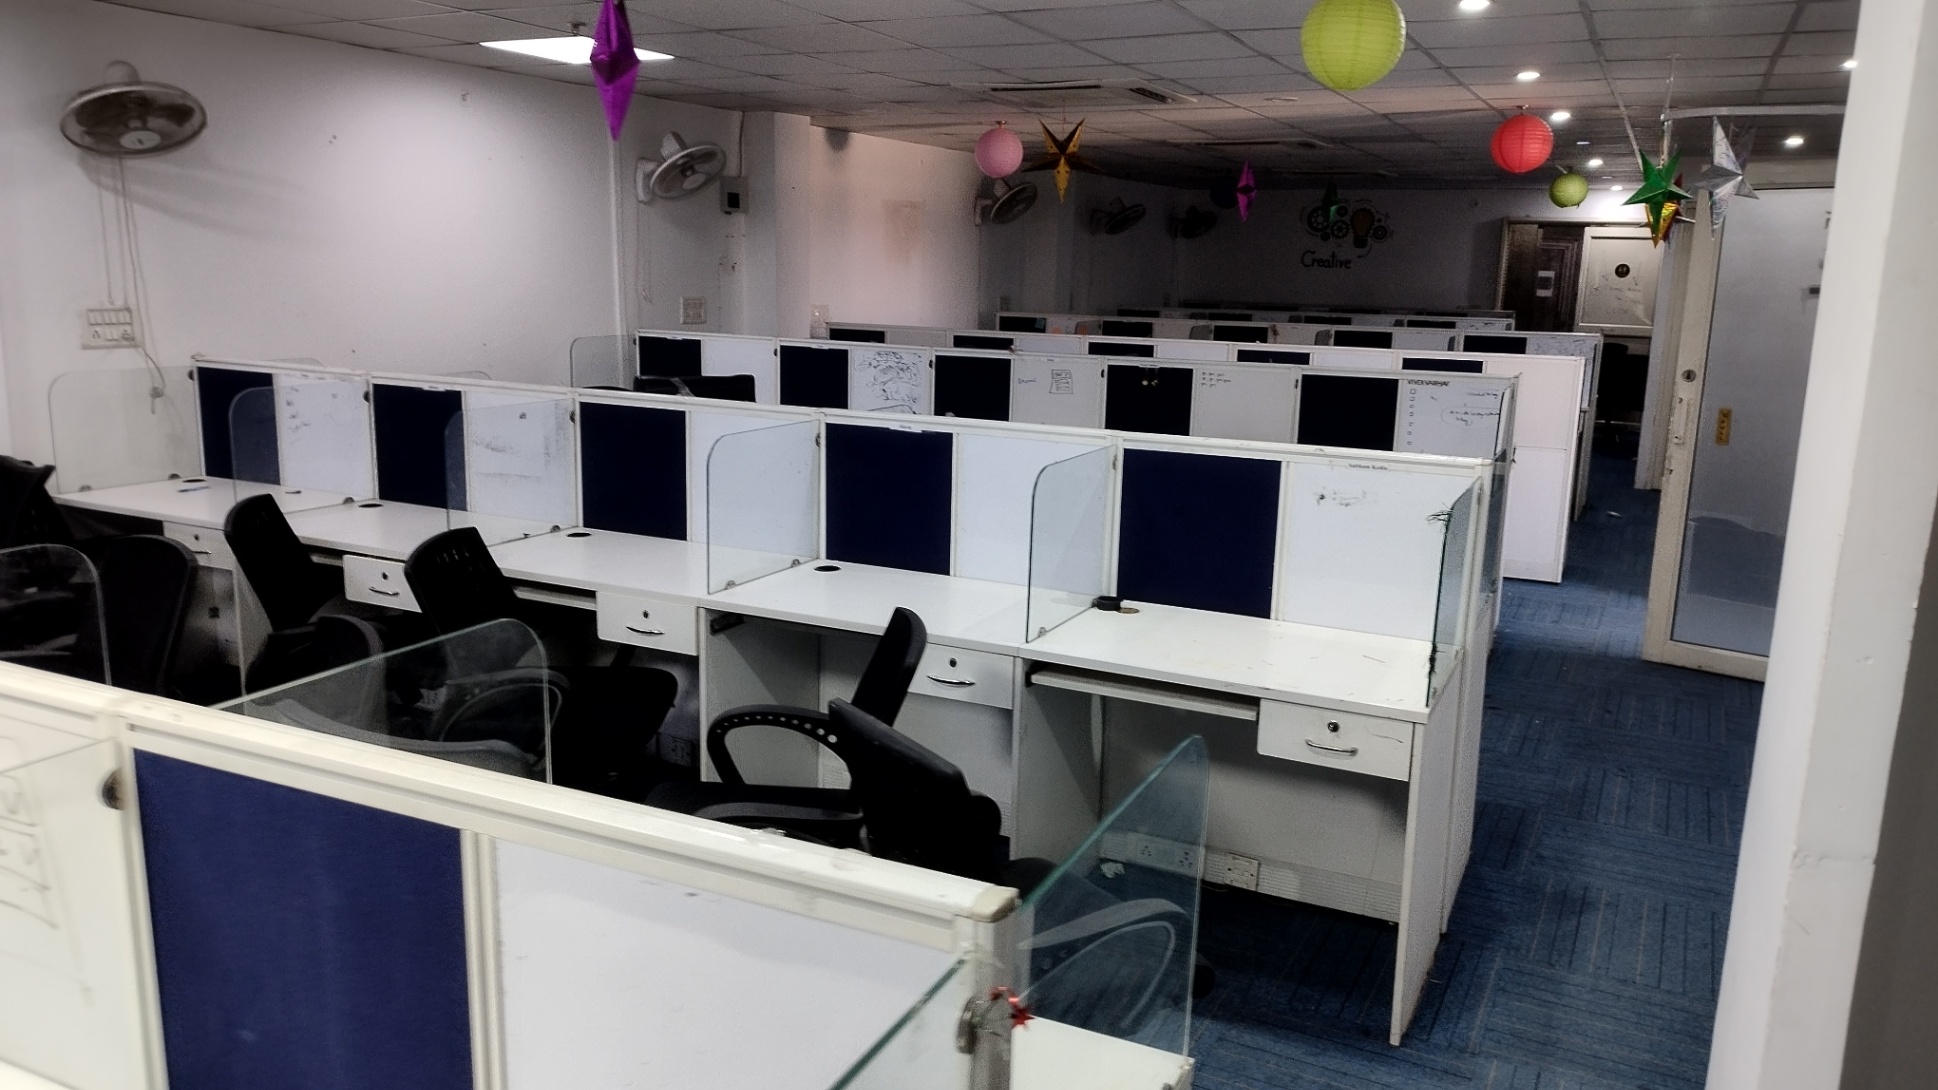 Rent Office/ Shop, 2650 sq ft carpet area, Furnished for rent @Sector 2 Noida